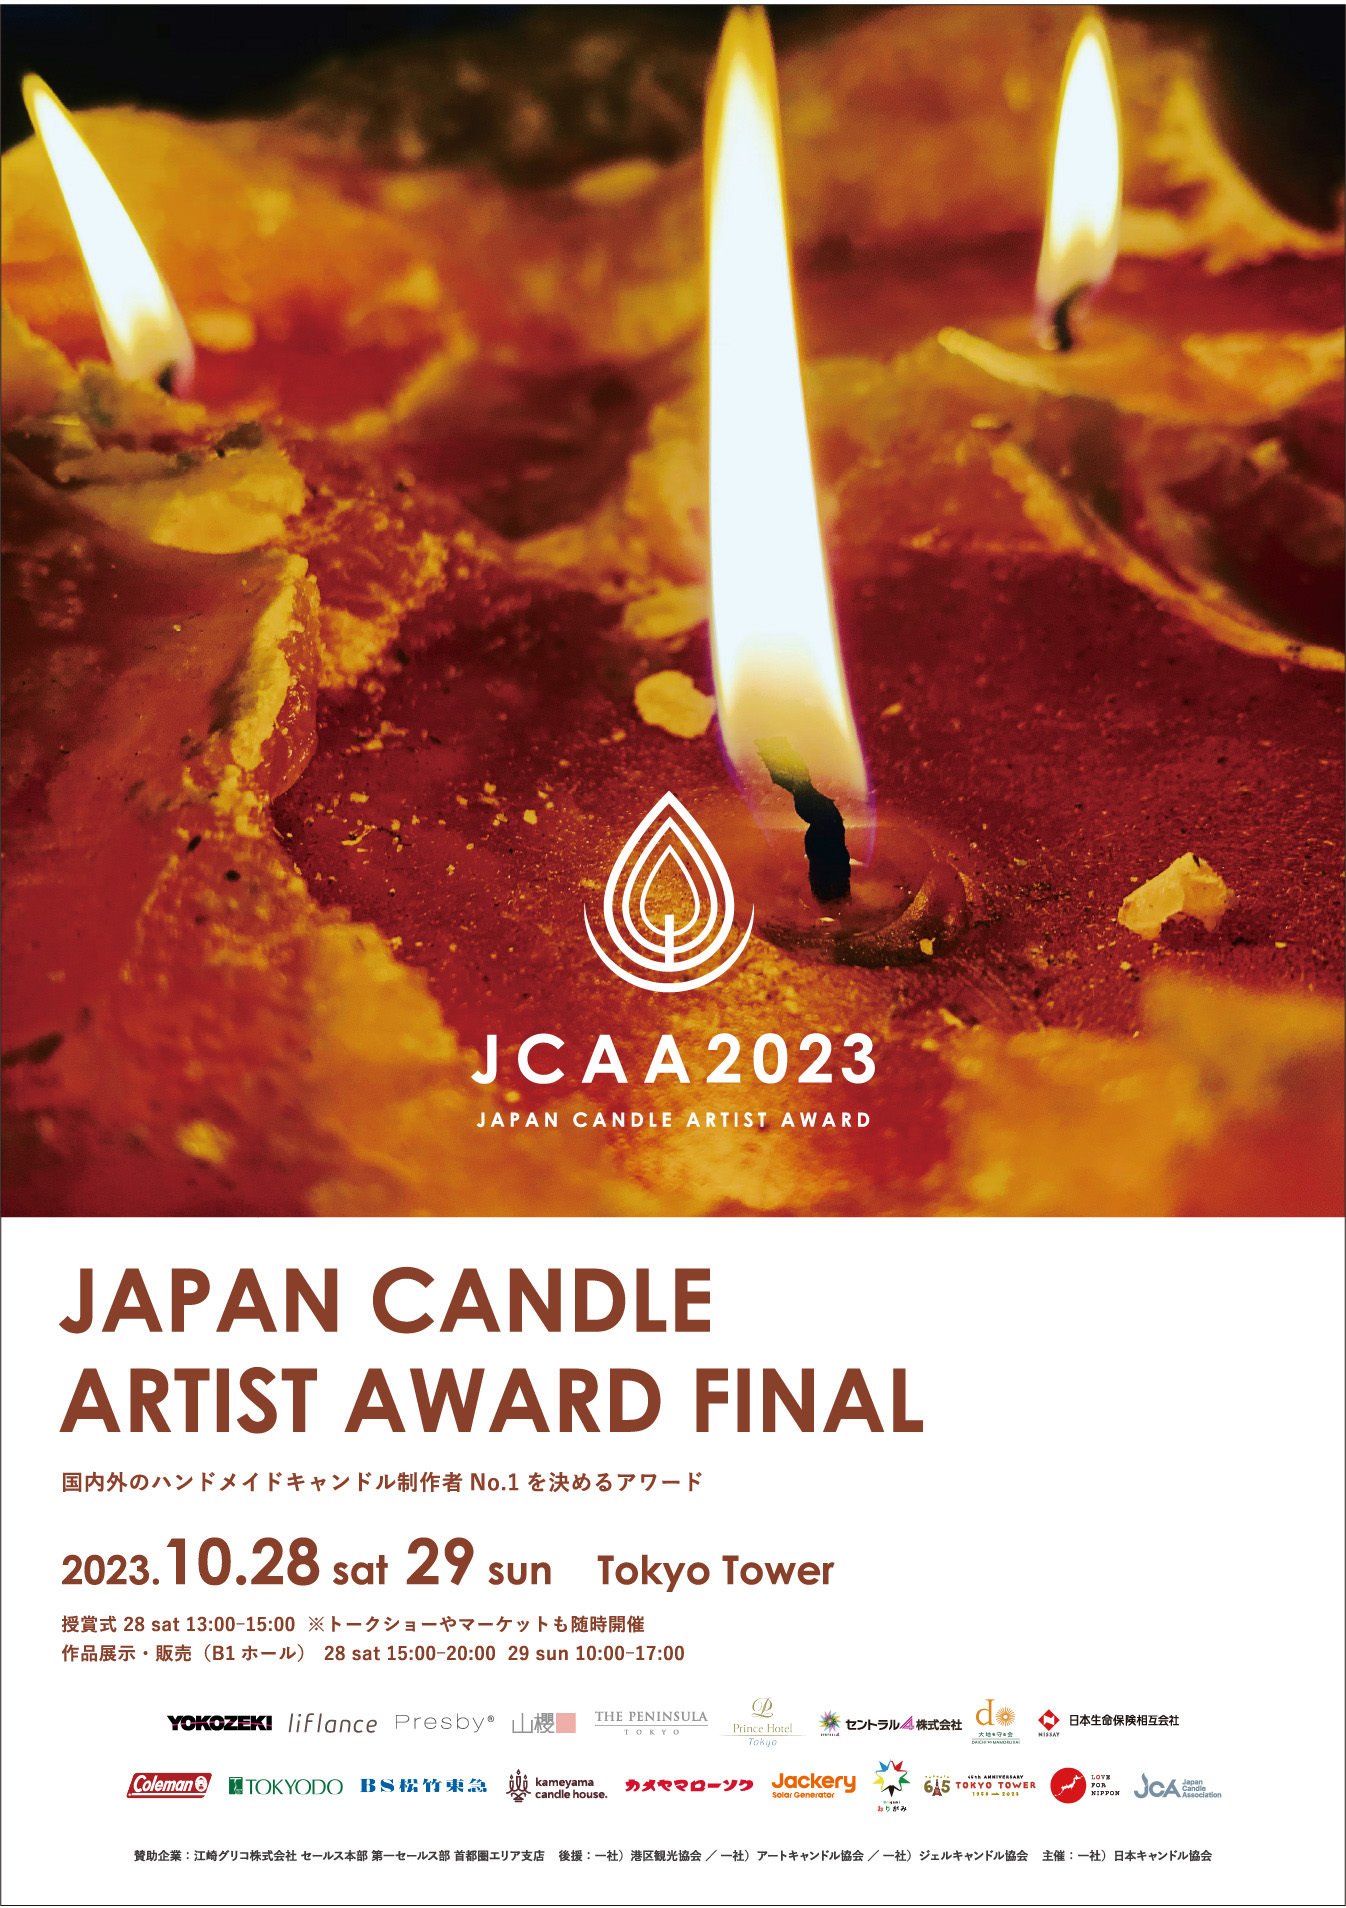 JCAA2023 JAPAN CANDLE ARTIST AWARD